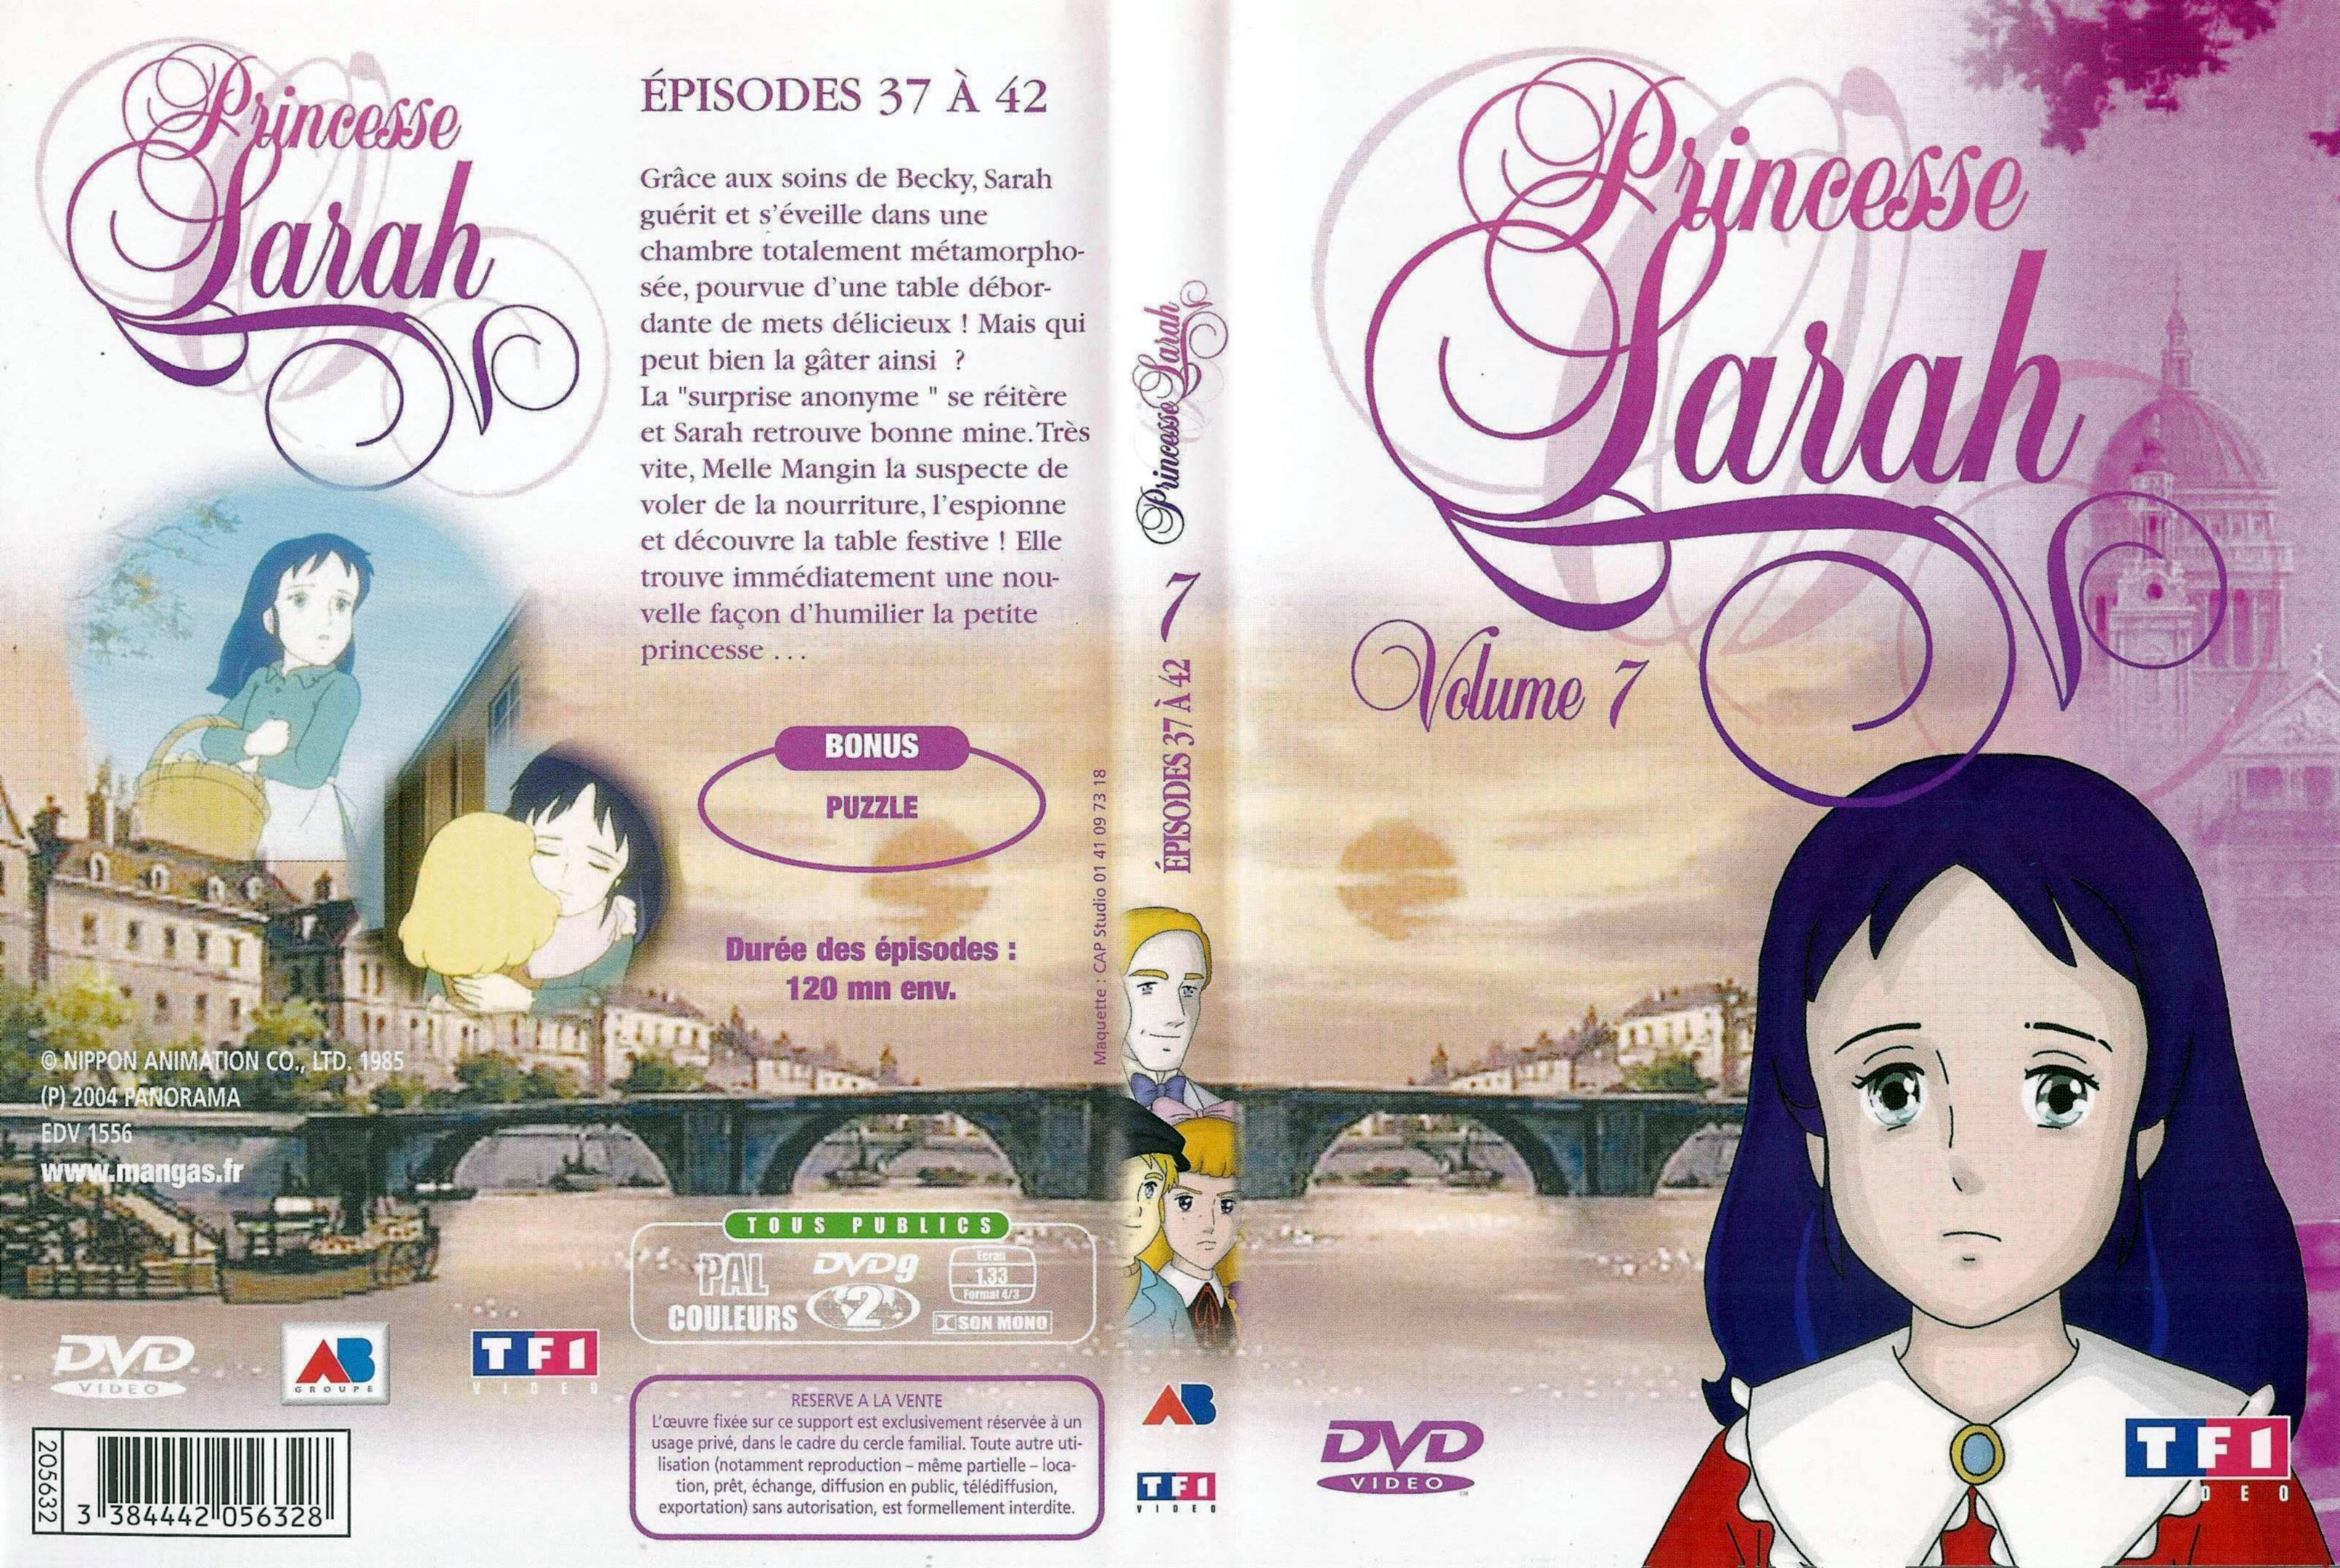 Jaquette DVD Princesse Sarah vol 7